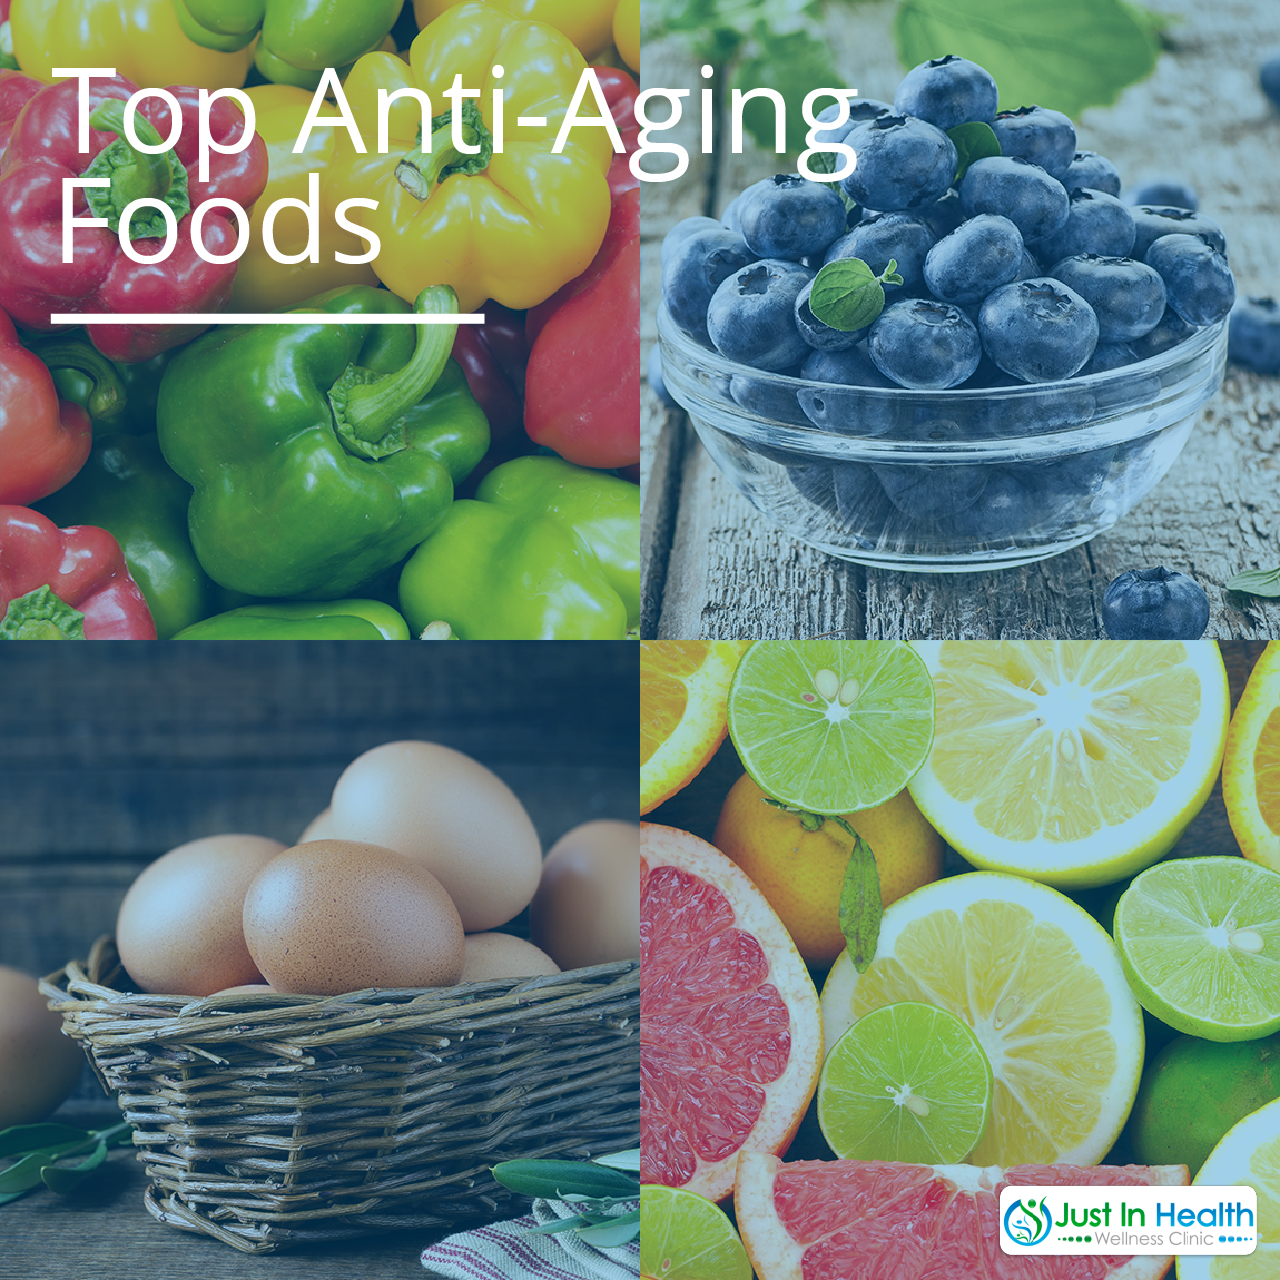 Top Anti-Aging Foods